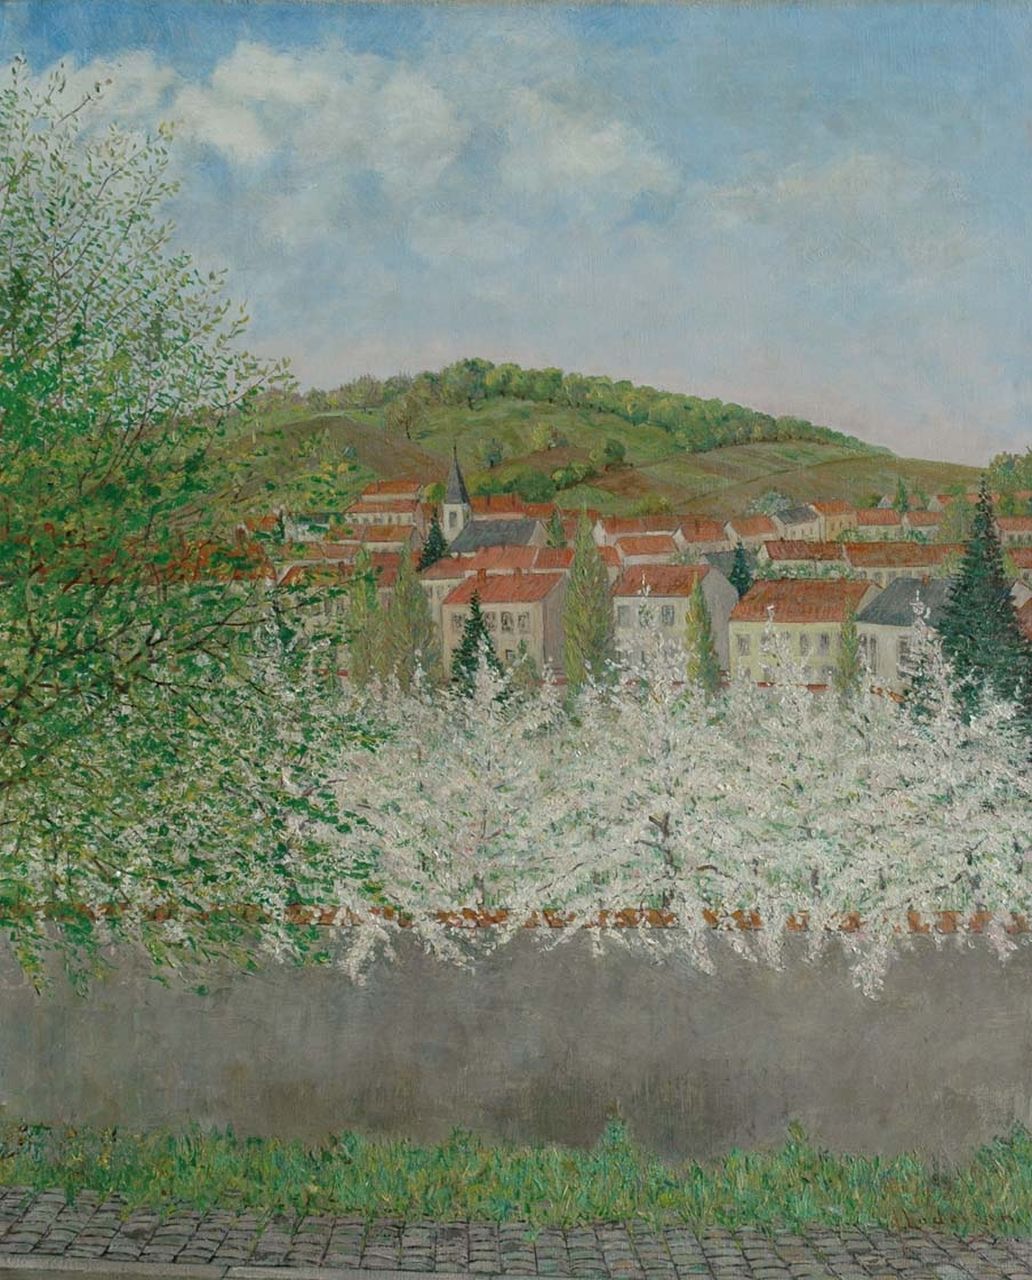 Lodeizen J.  | Johannes 'Jo' Lodeizen, View on a village in a hilly landscape, oil on canvas 80.4 x 65.2 cm, signed l.r.